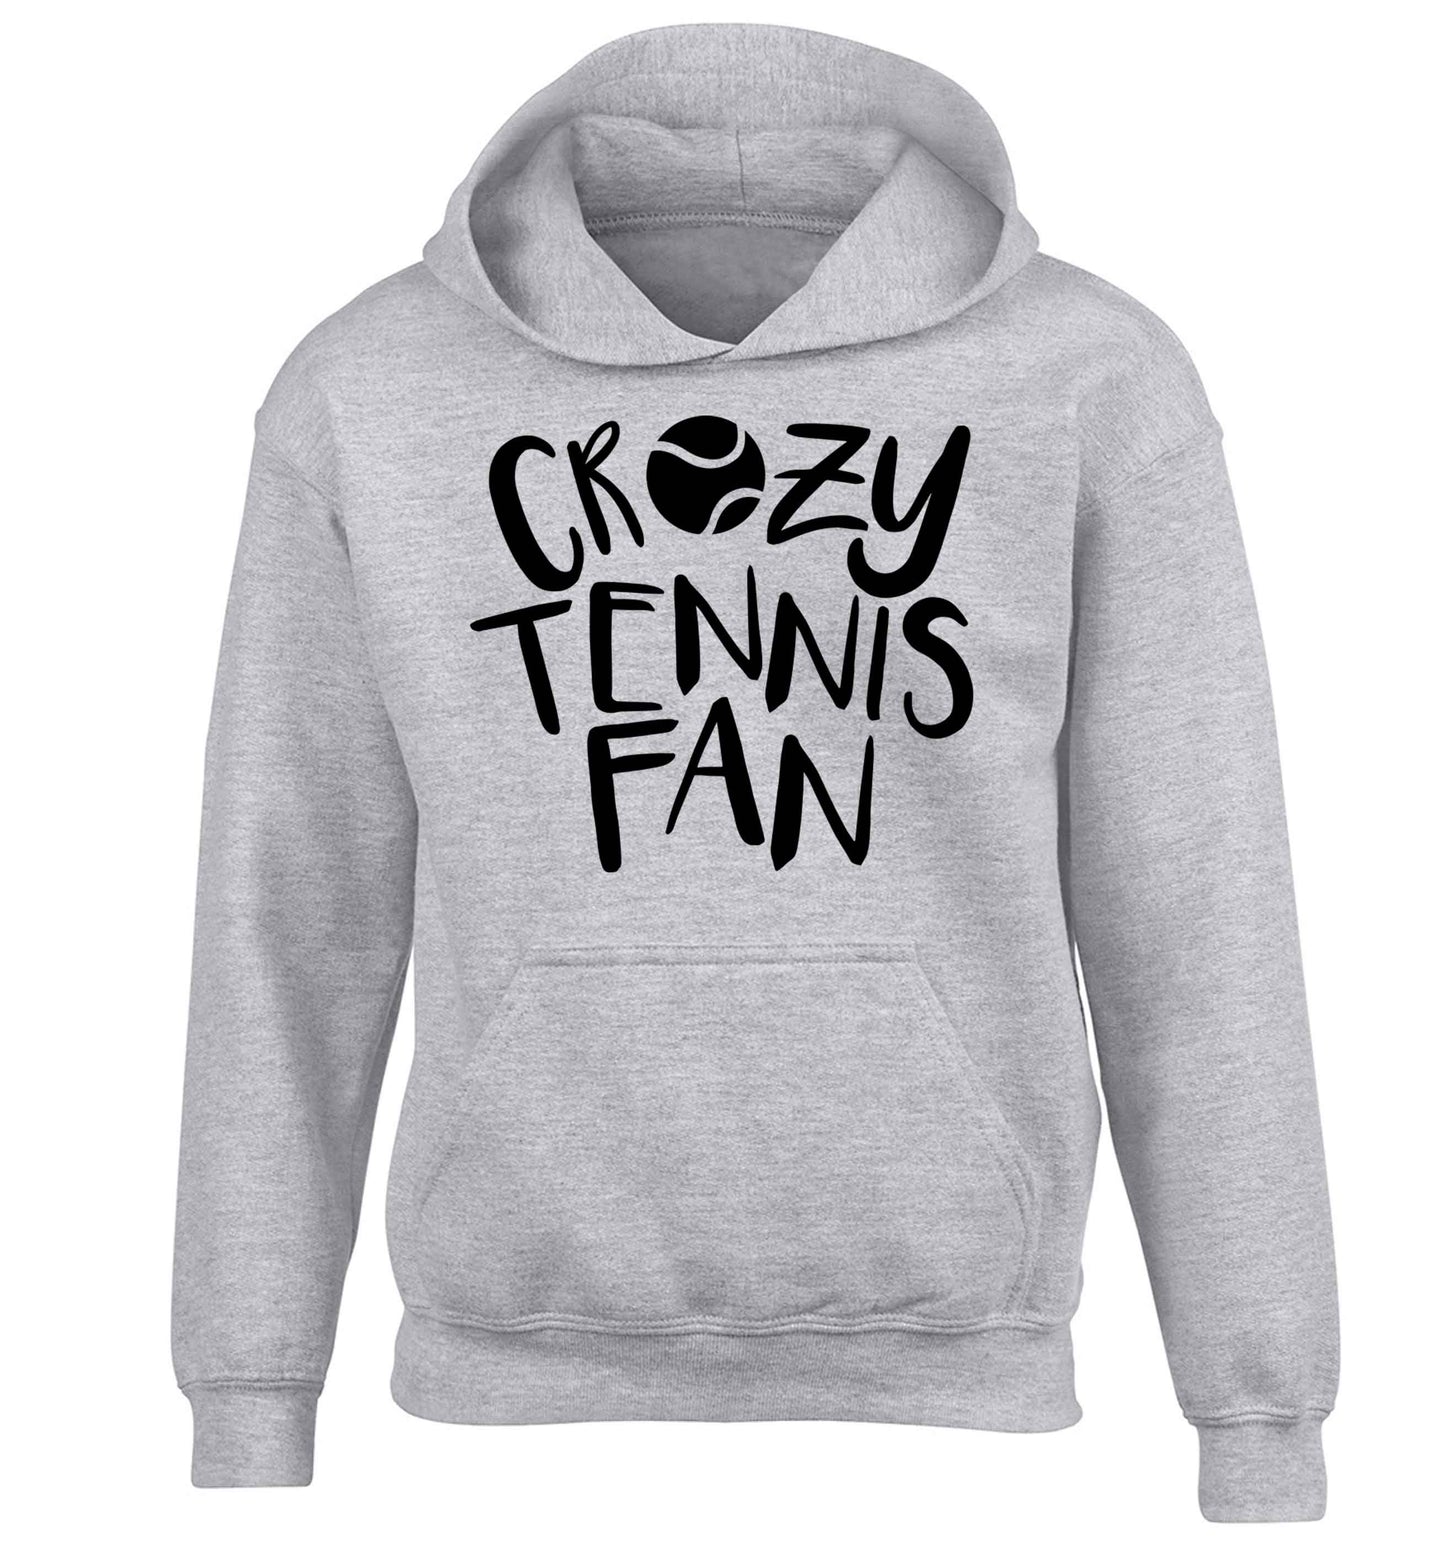 Crazy tennis fan children's grey hoodie 12-13 Years